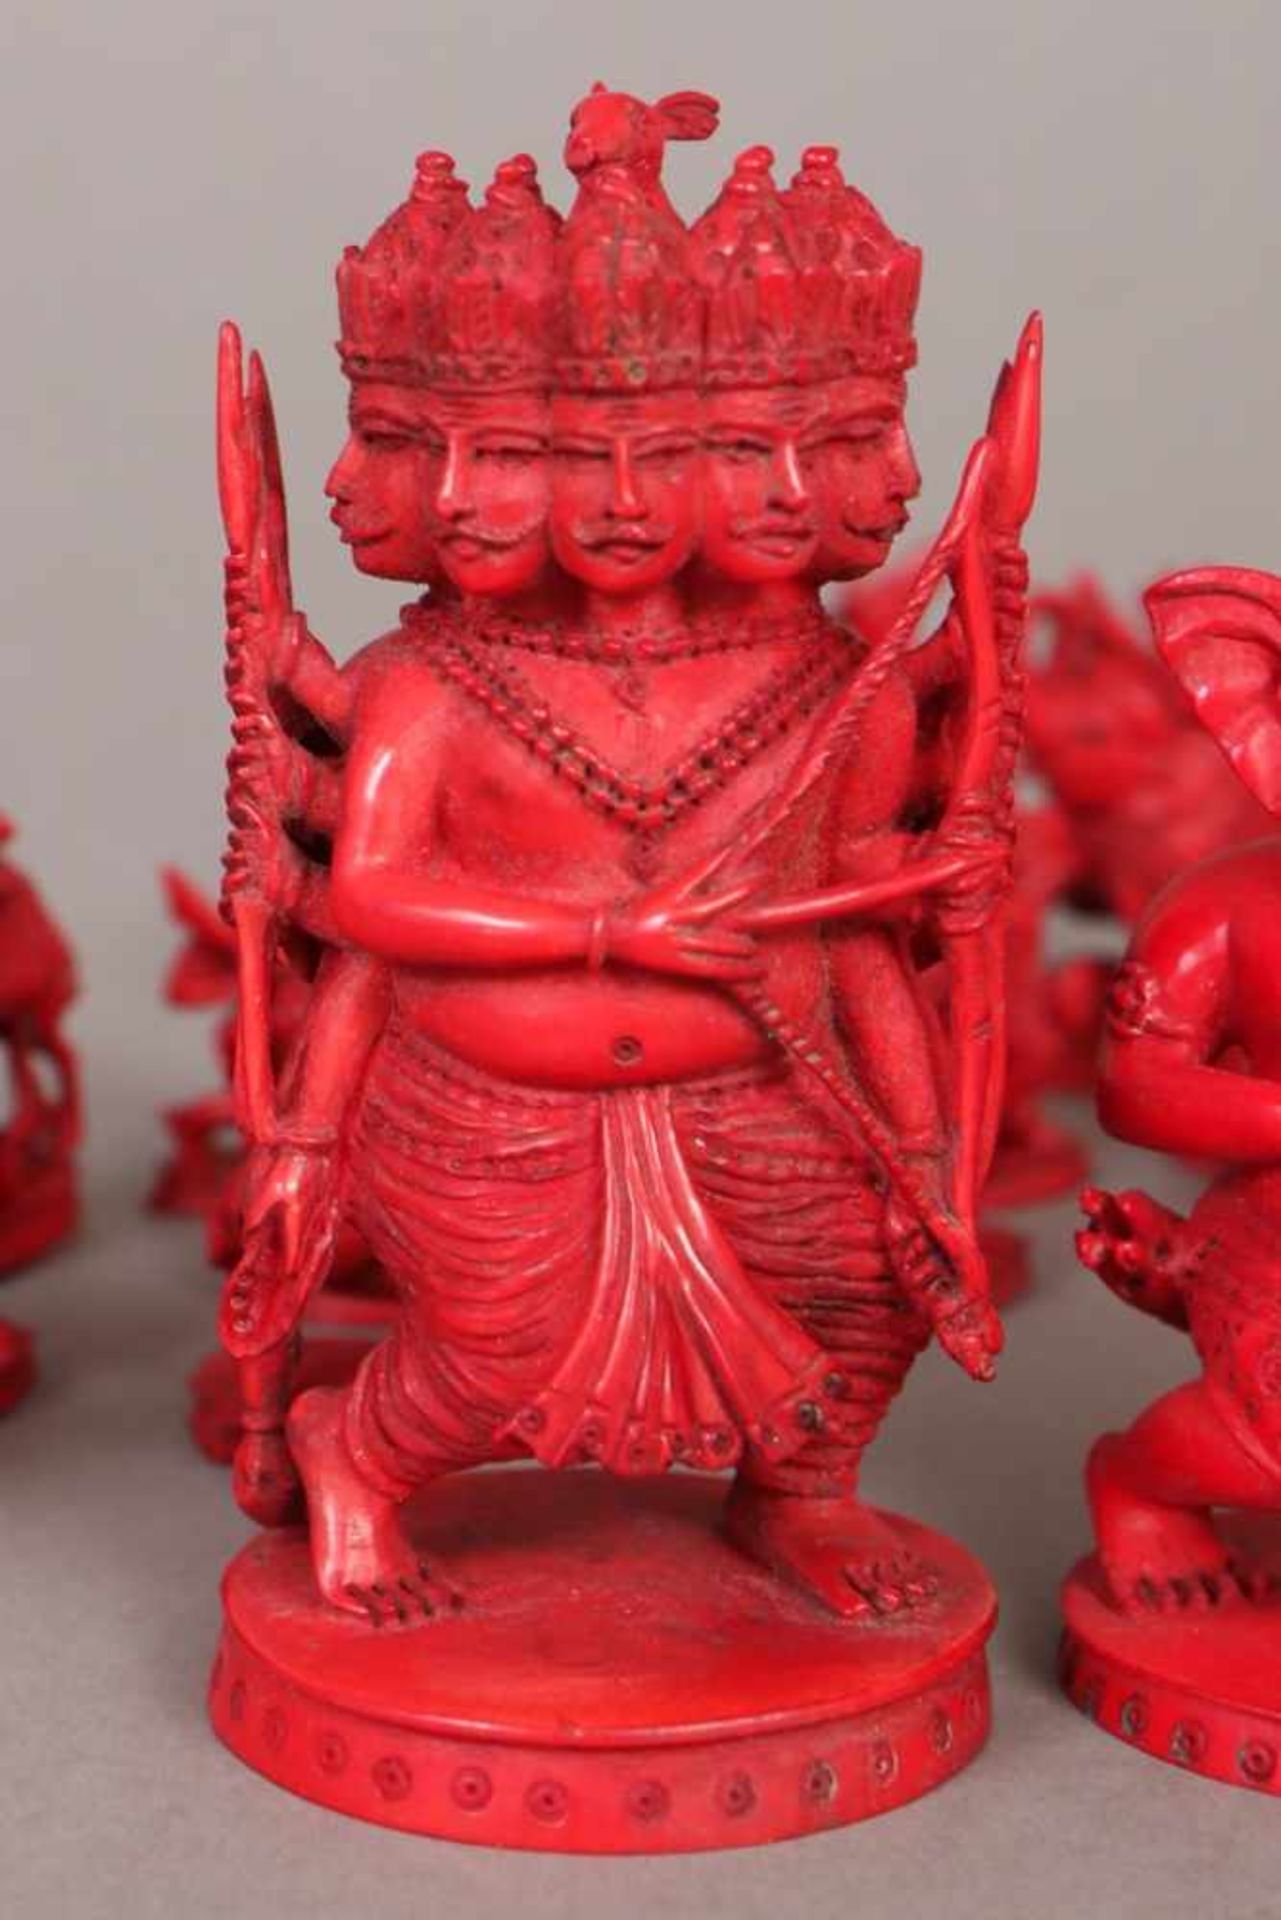 Schachfiguren ¨Hinduistische Gottheiten¨ (Ravana, Rama u.a.) Figuren Bein, geschnitzt, teilweise rot - Image 3 of 3